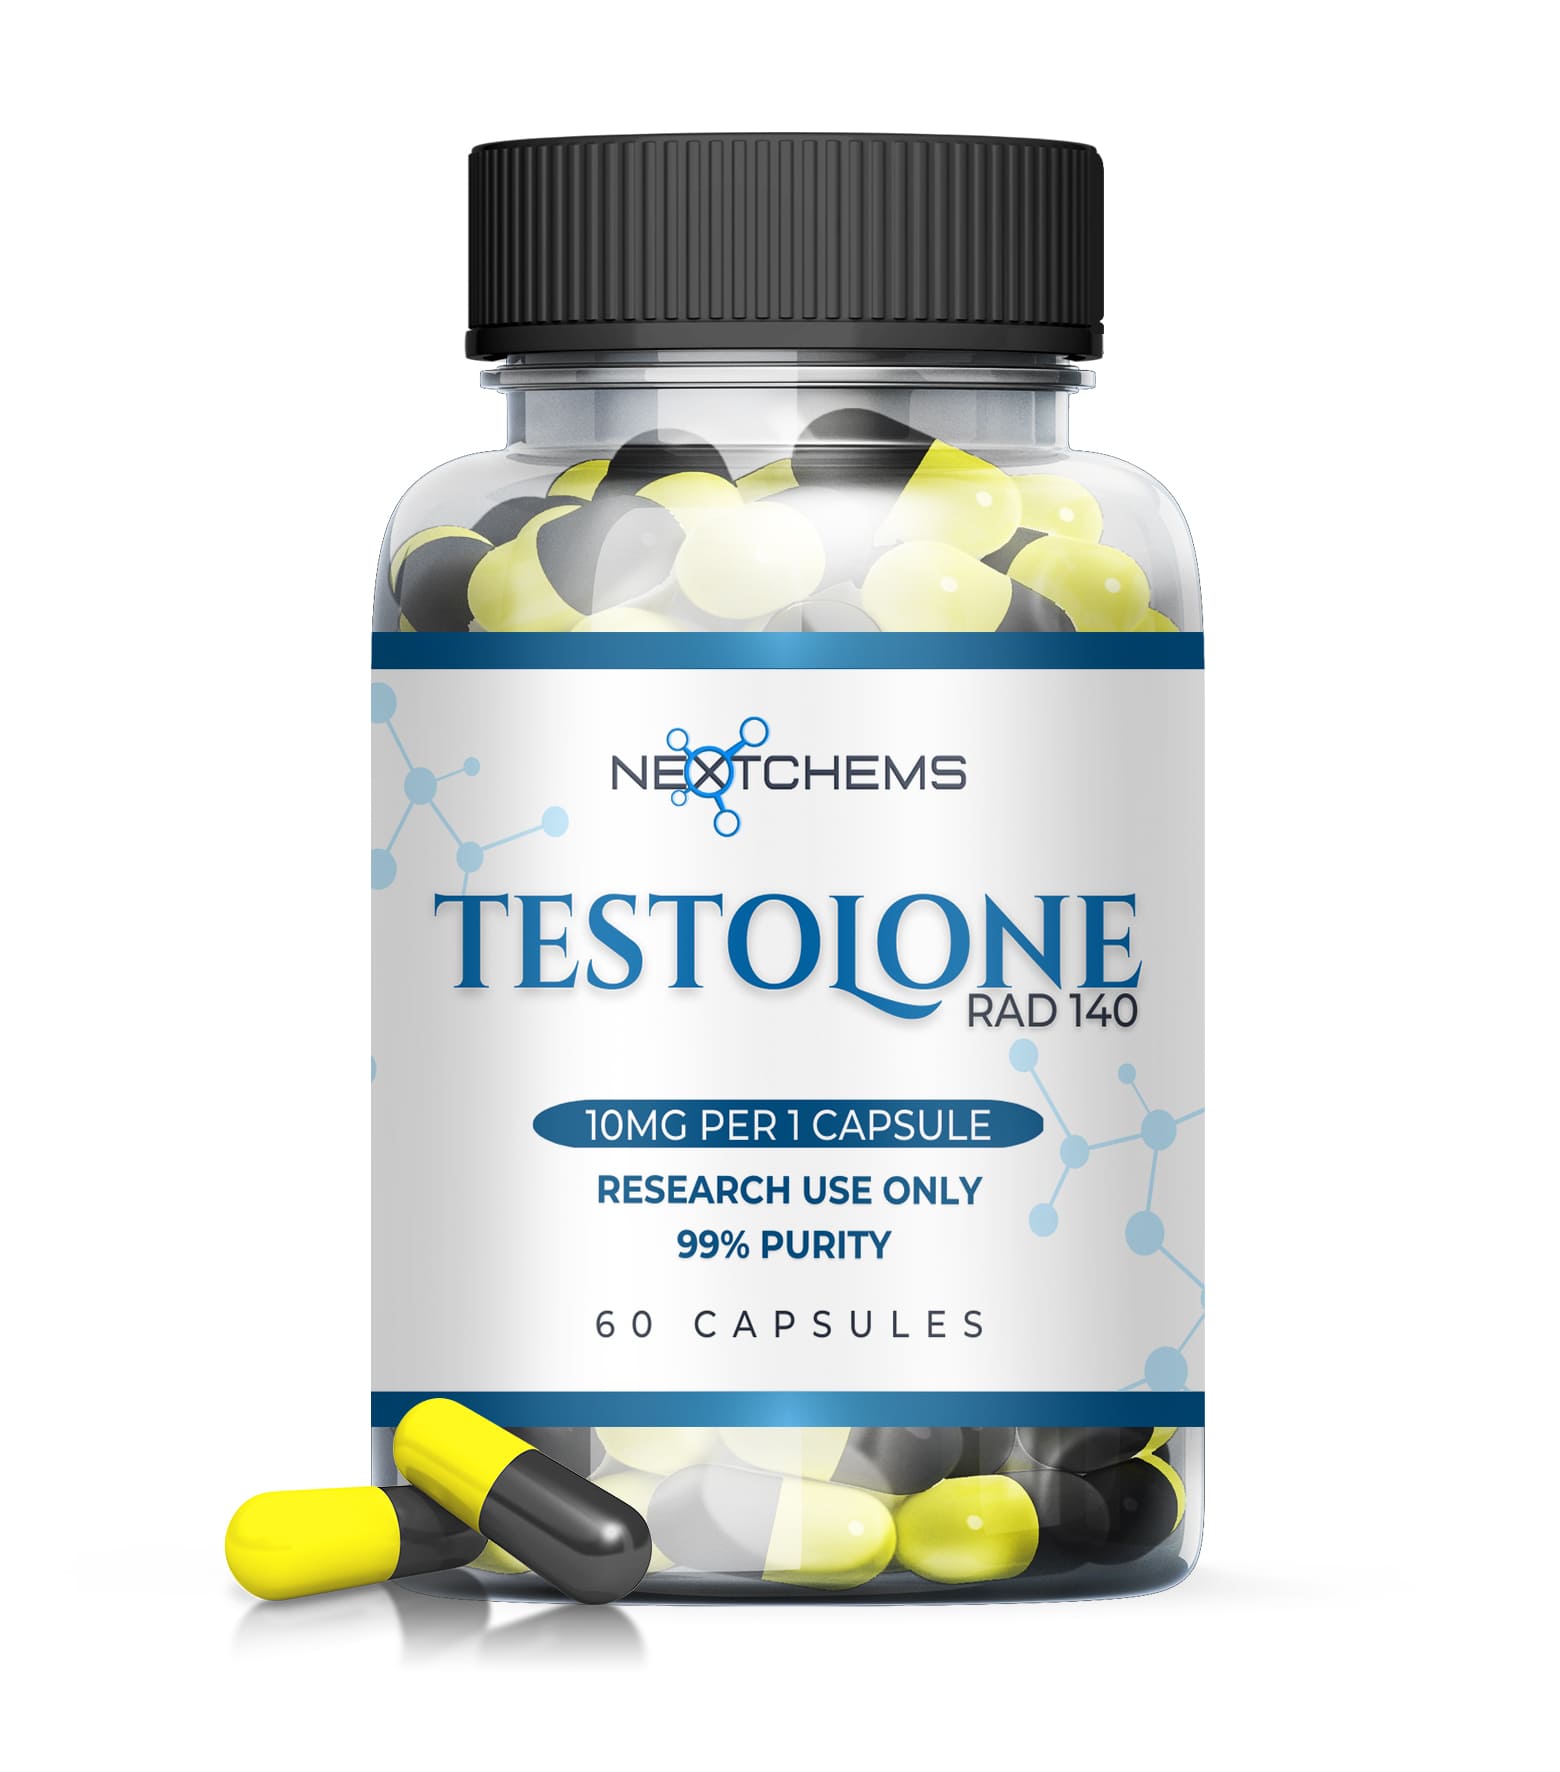 Next Chems Testolone product image